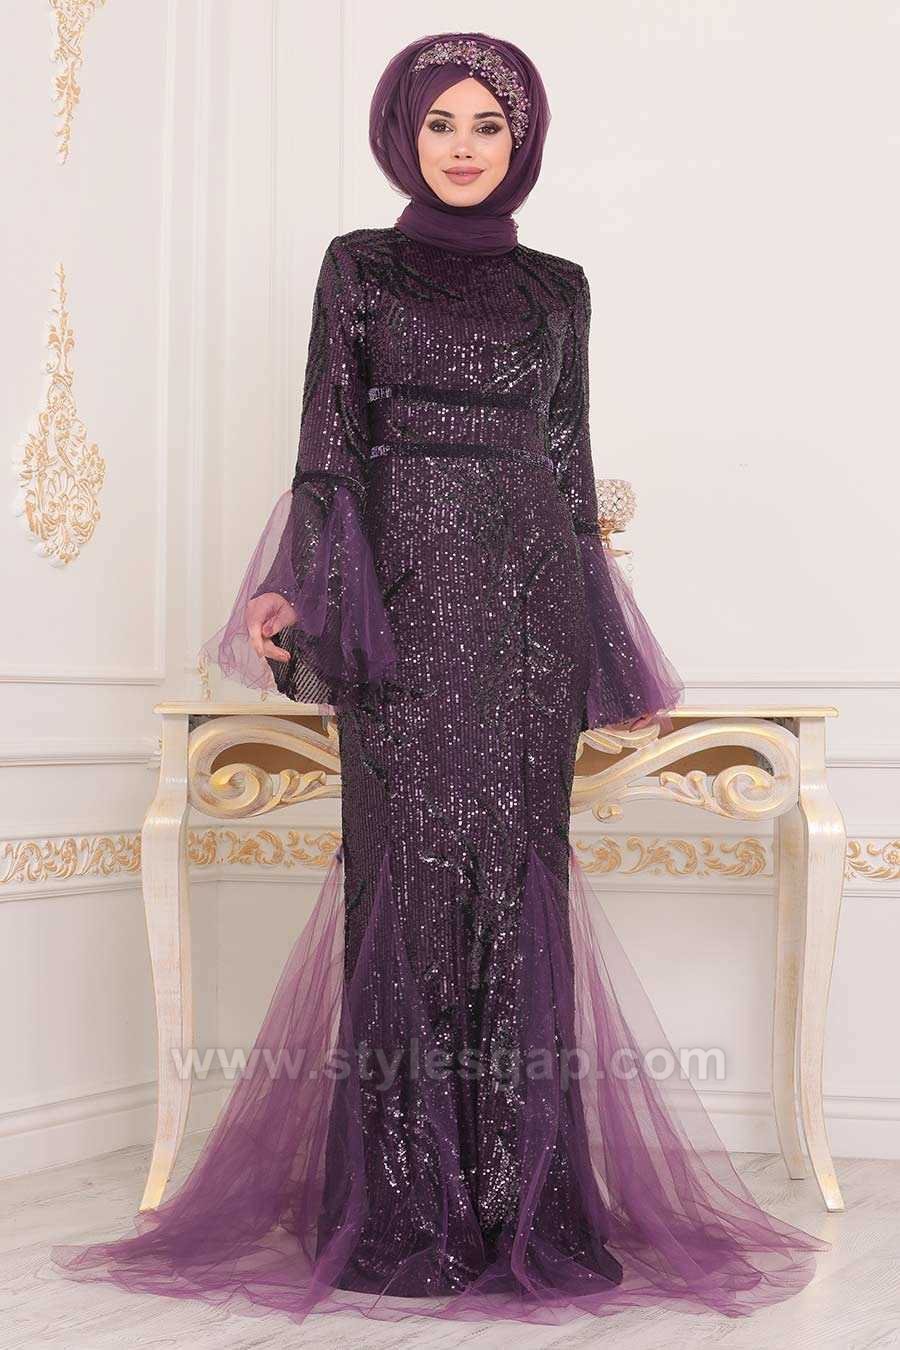 Fancy Party Wear Formal Hijabs Abaya Evening Dresses